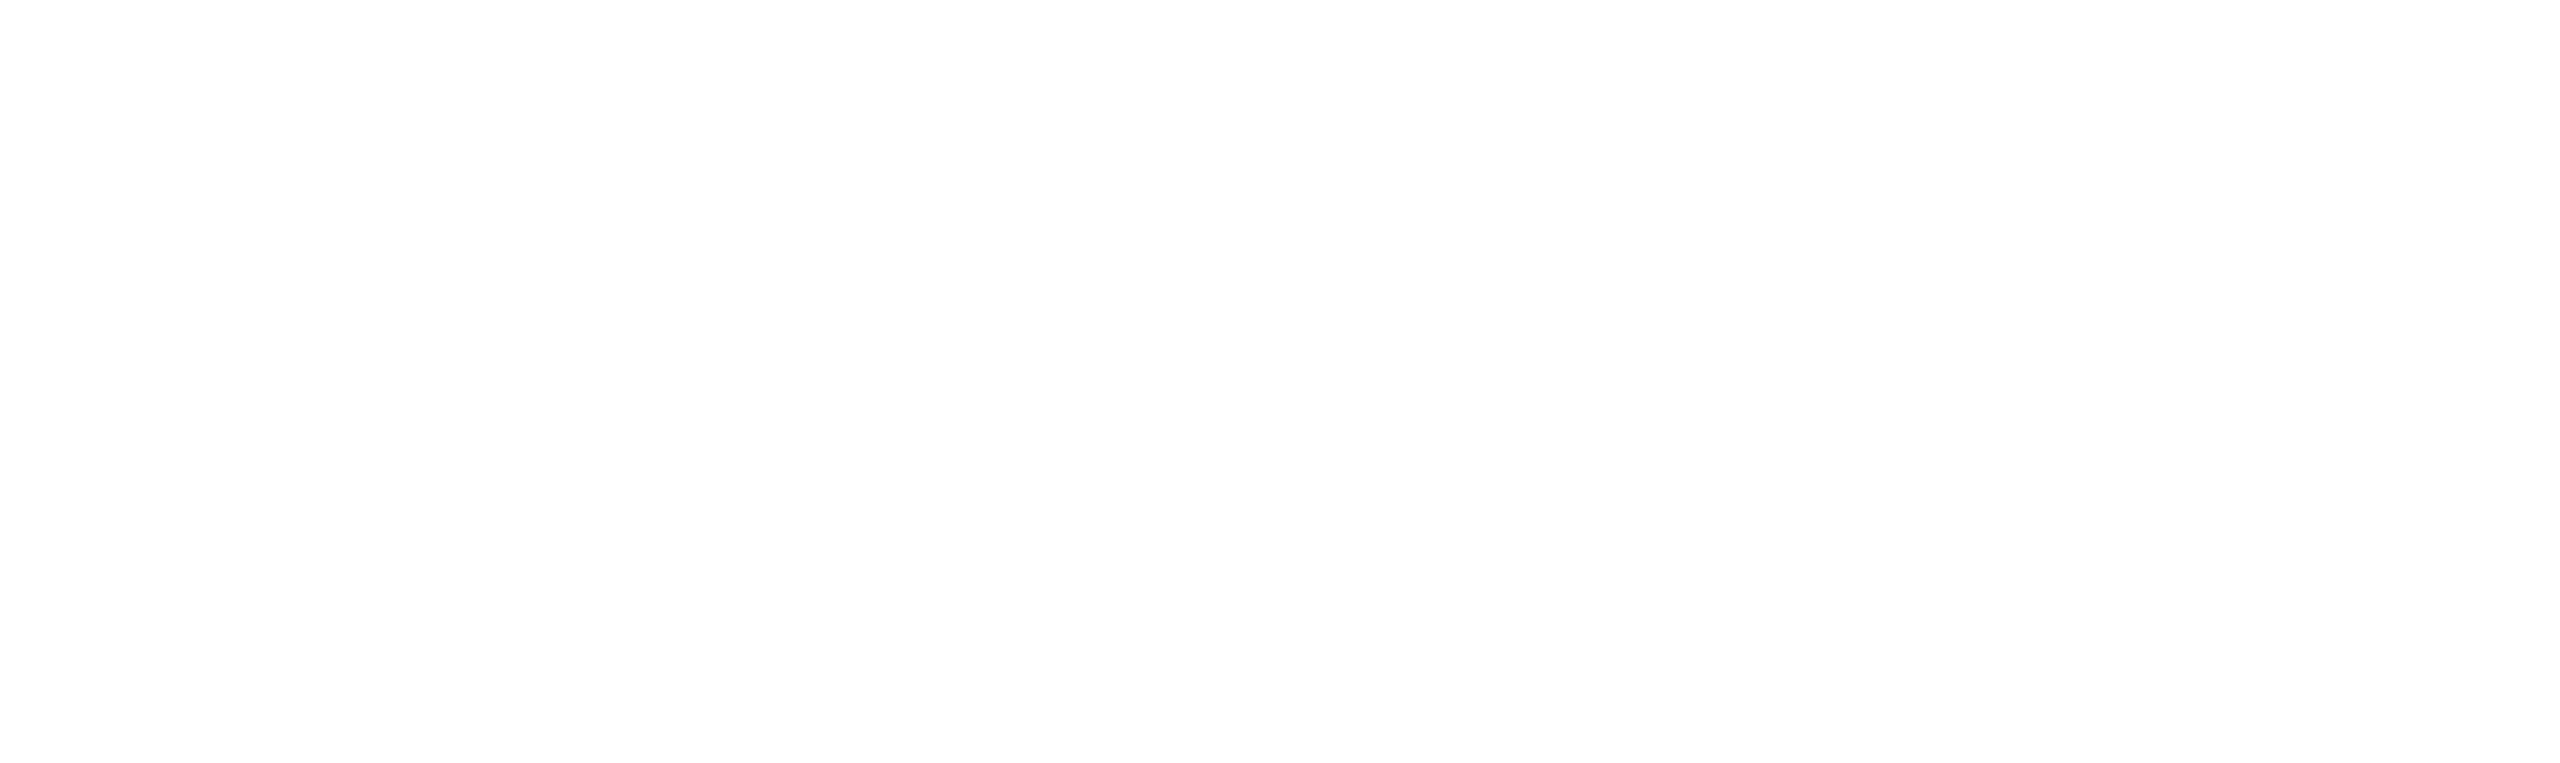 closed-logo